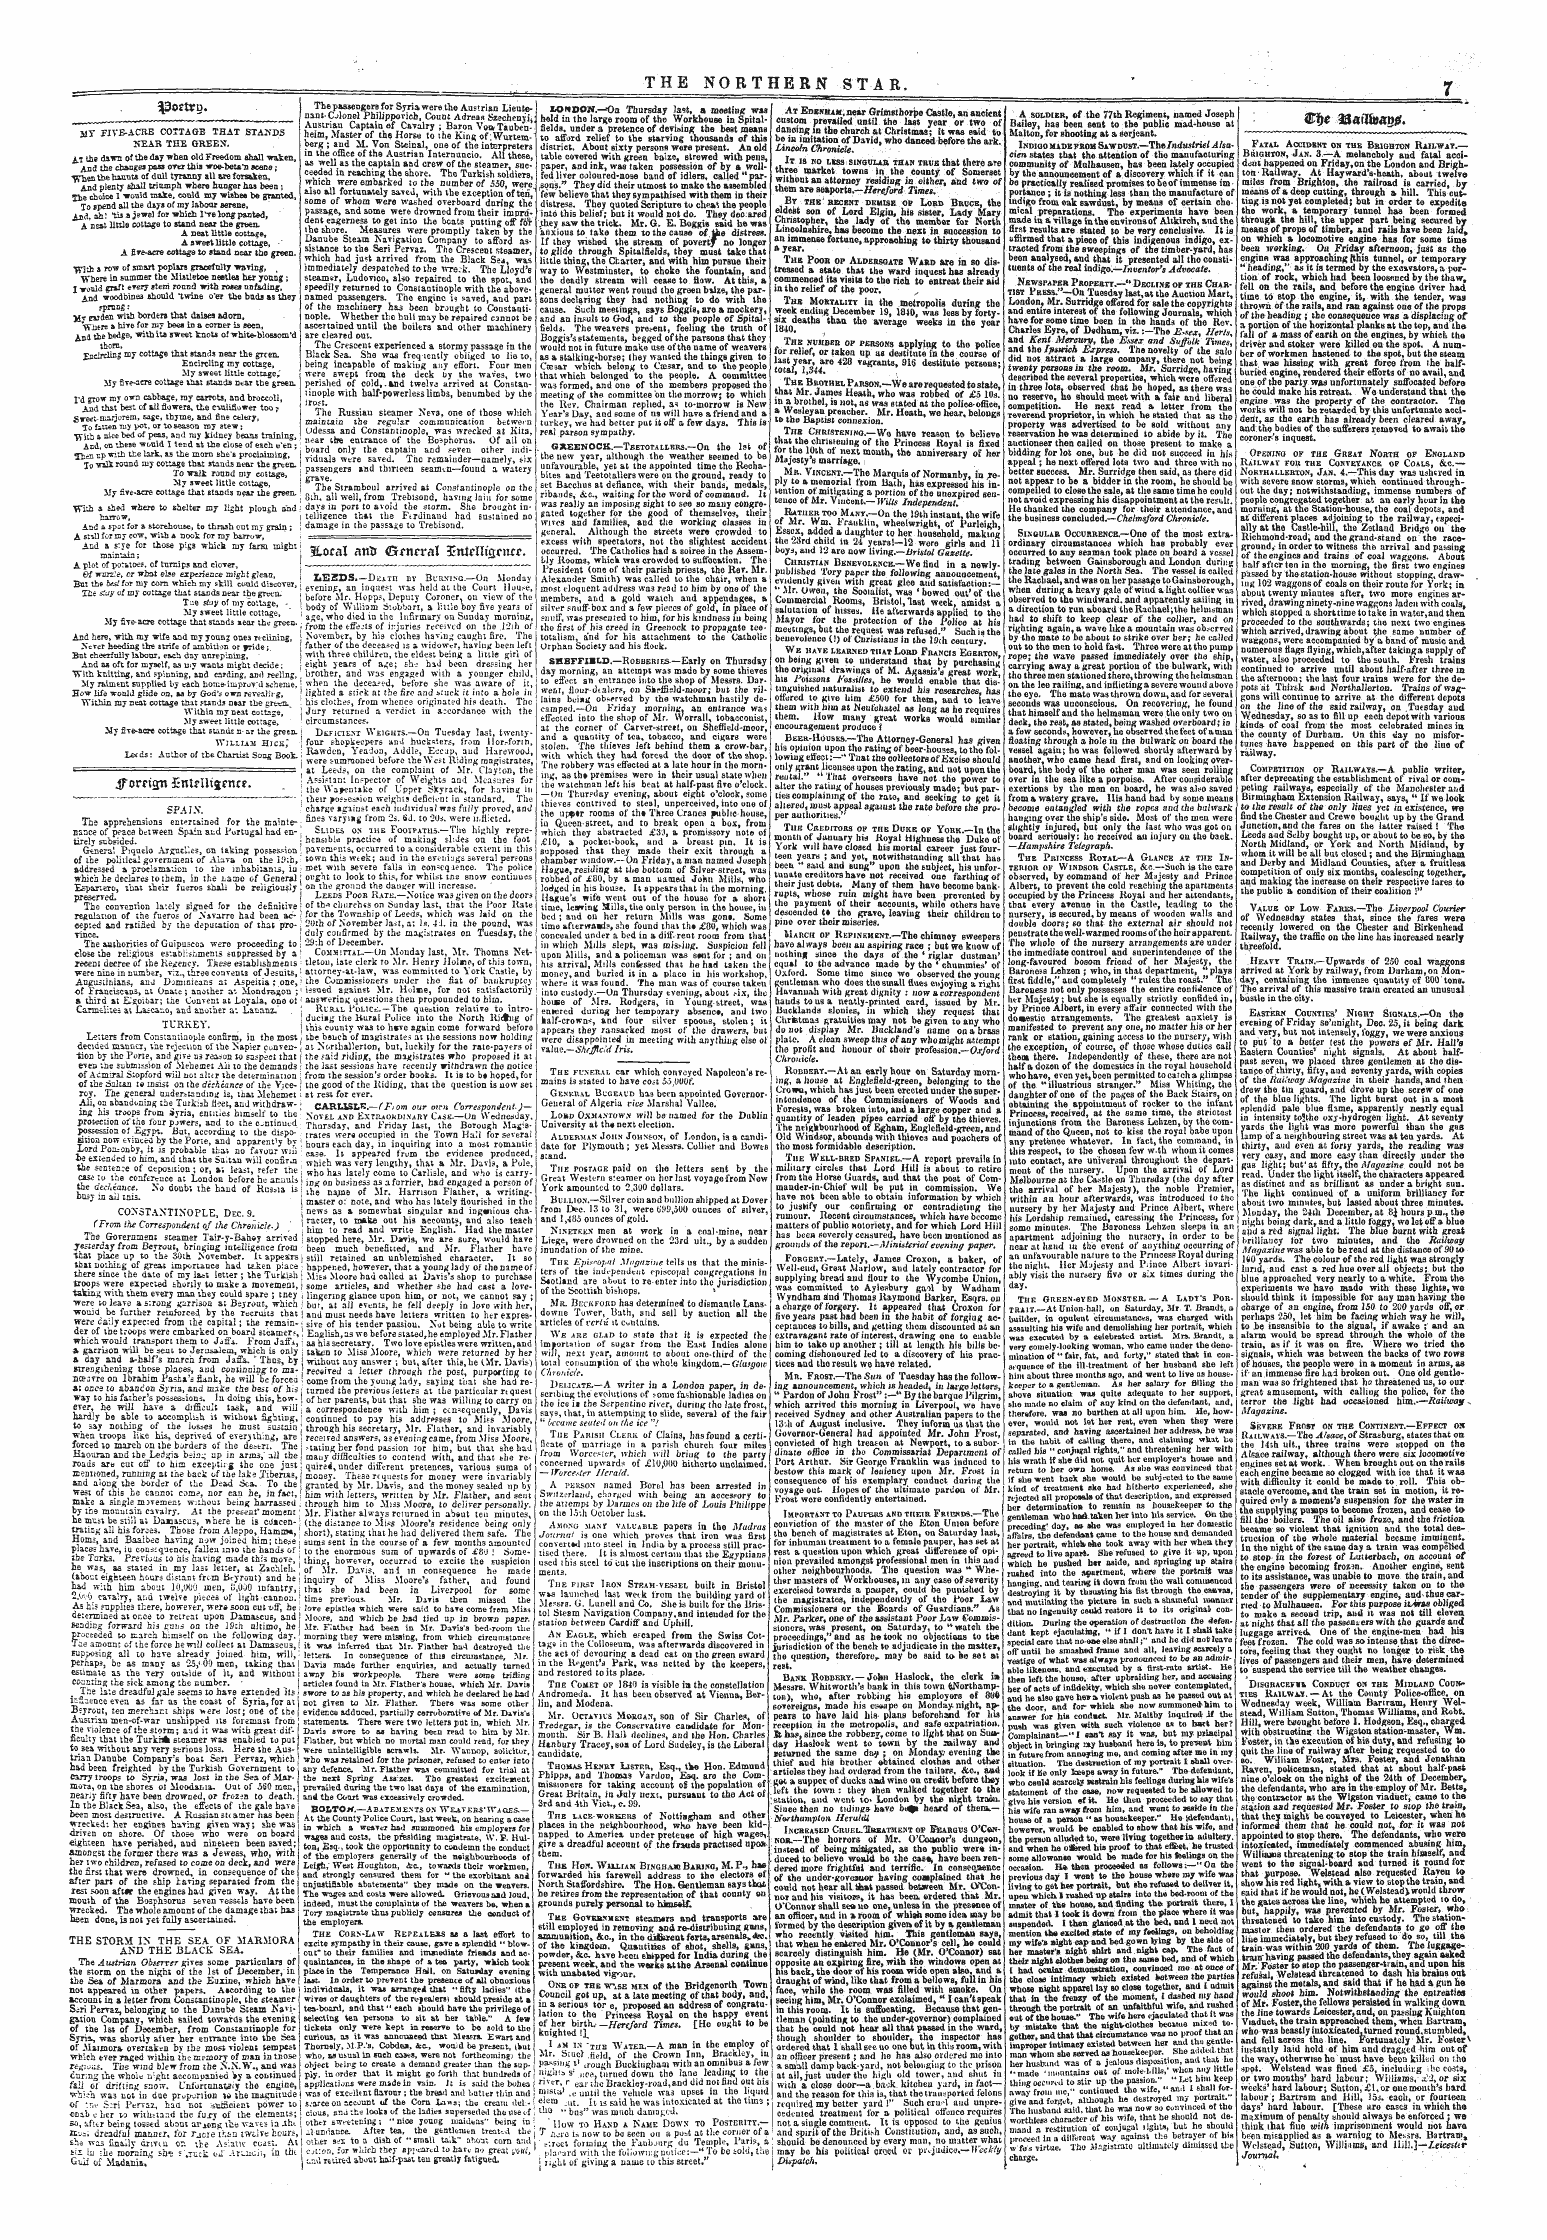 Northern Star (1837-1852): jS F Y, 2nd edition - Sfovt Tcjn £Nl?Ui J? Nc *